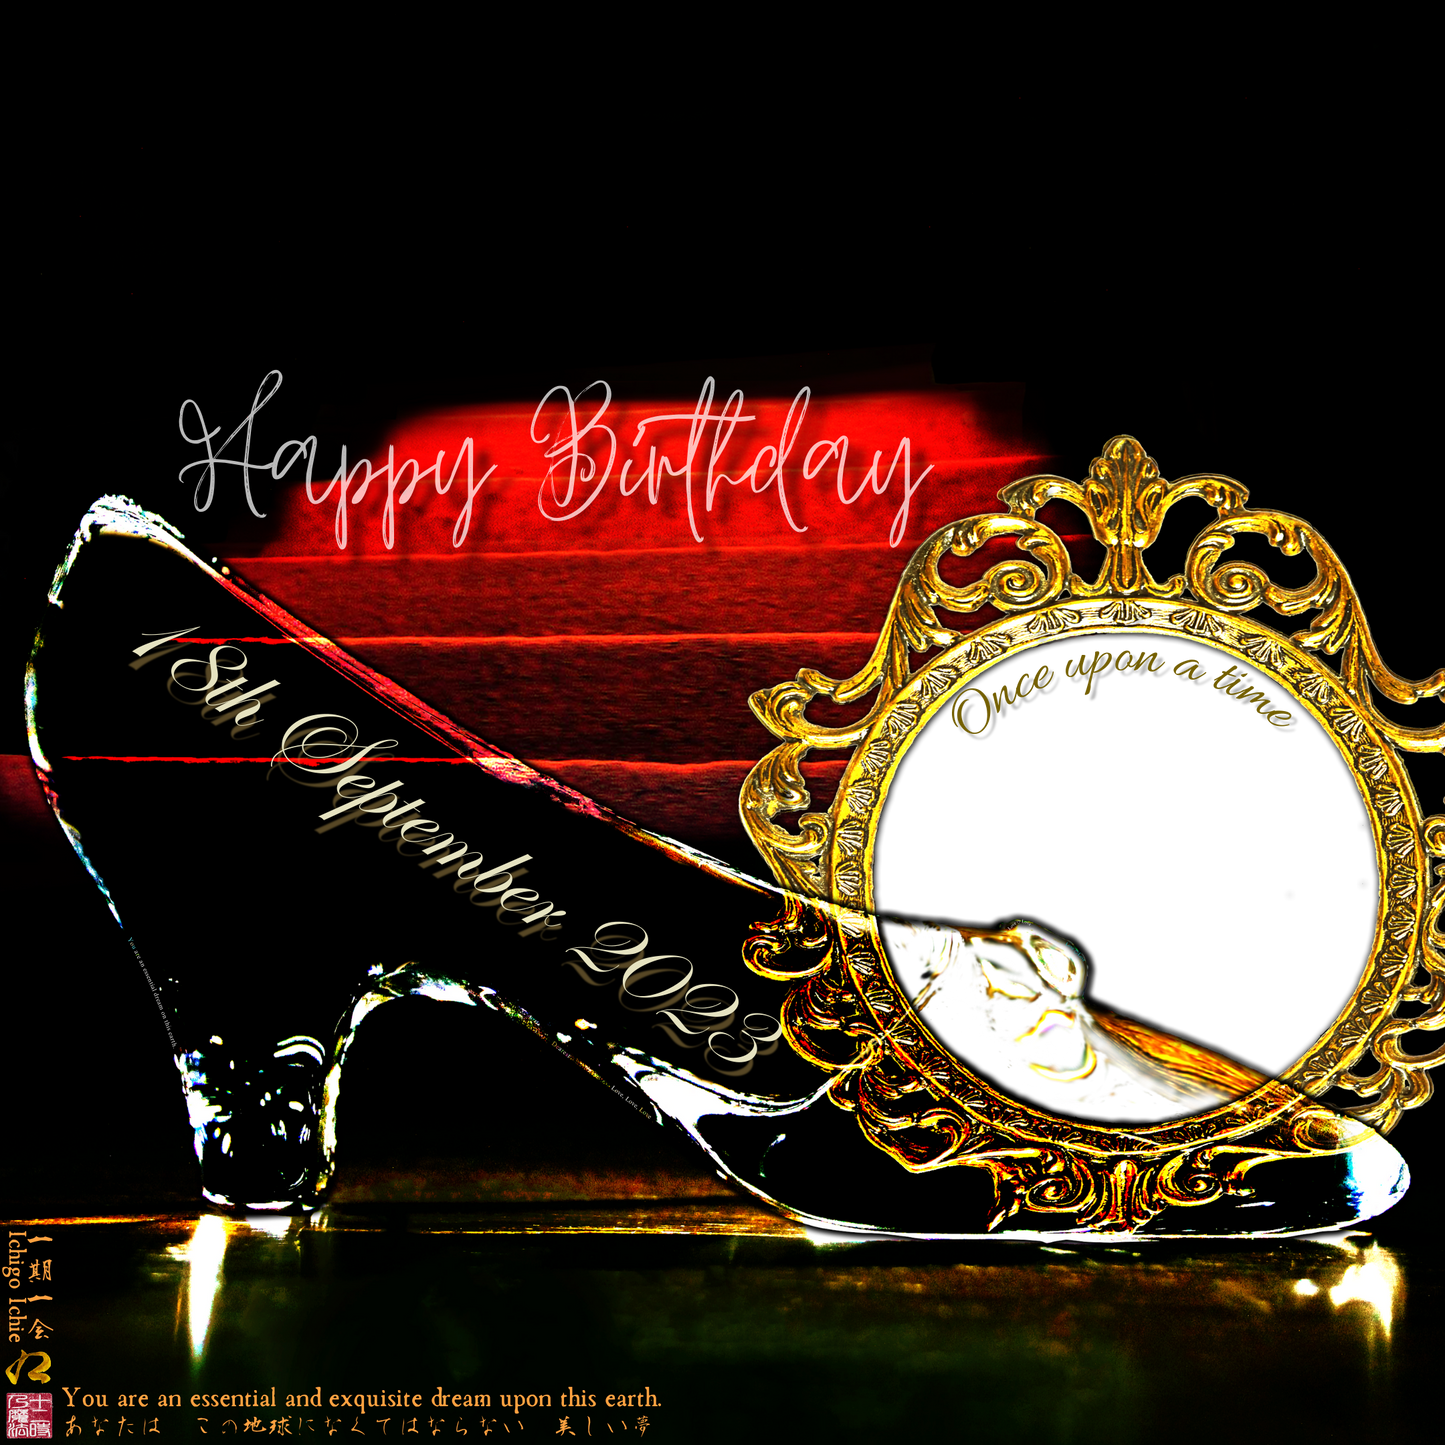 Happy Birthday Glass Slipper "Ichigo Ichie" 18th September 2023 the Right (1-of-1) NFT Art